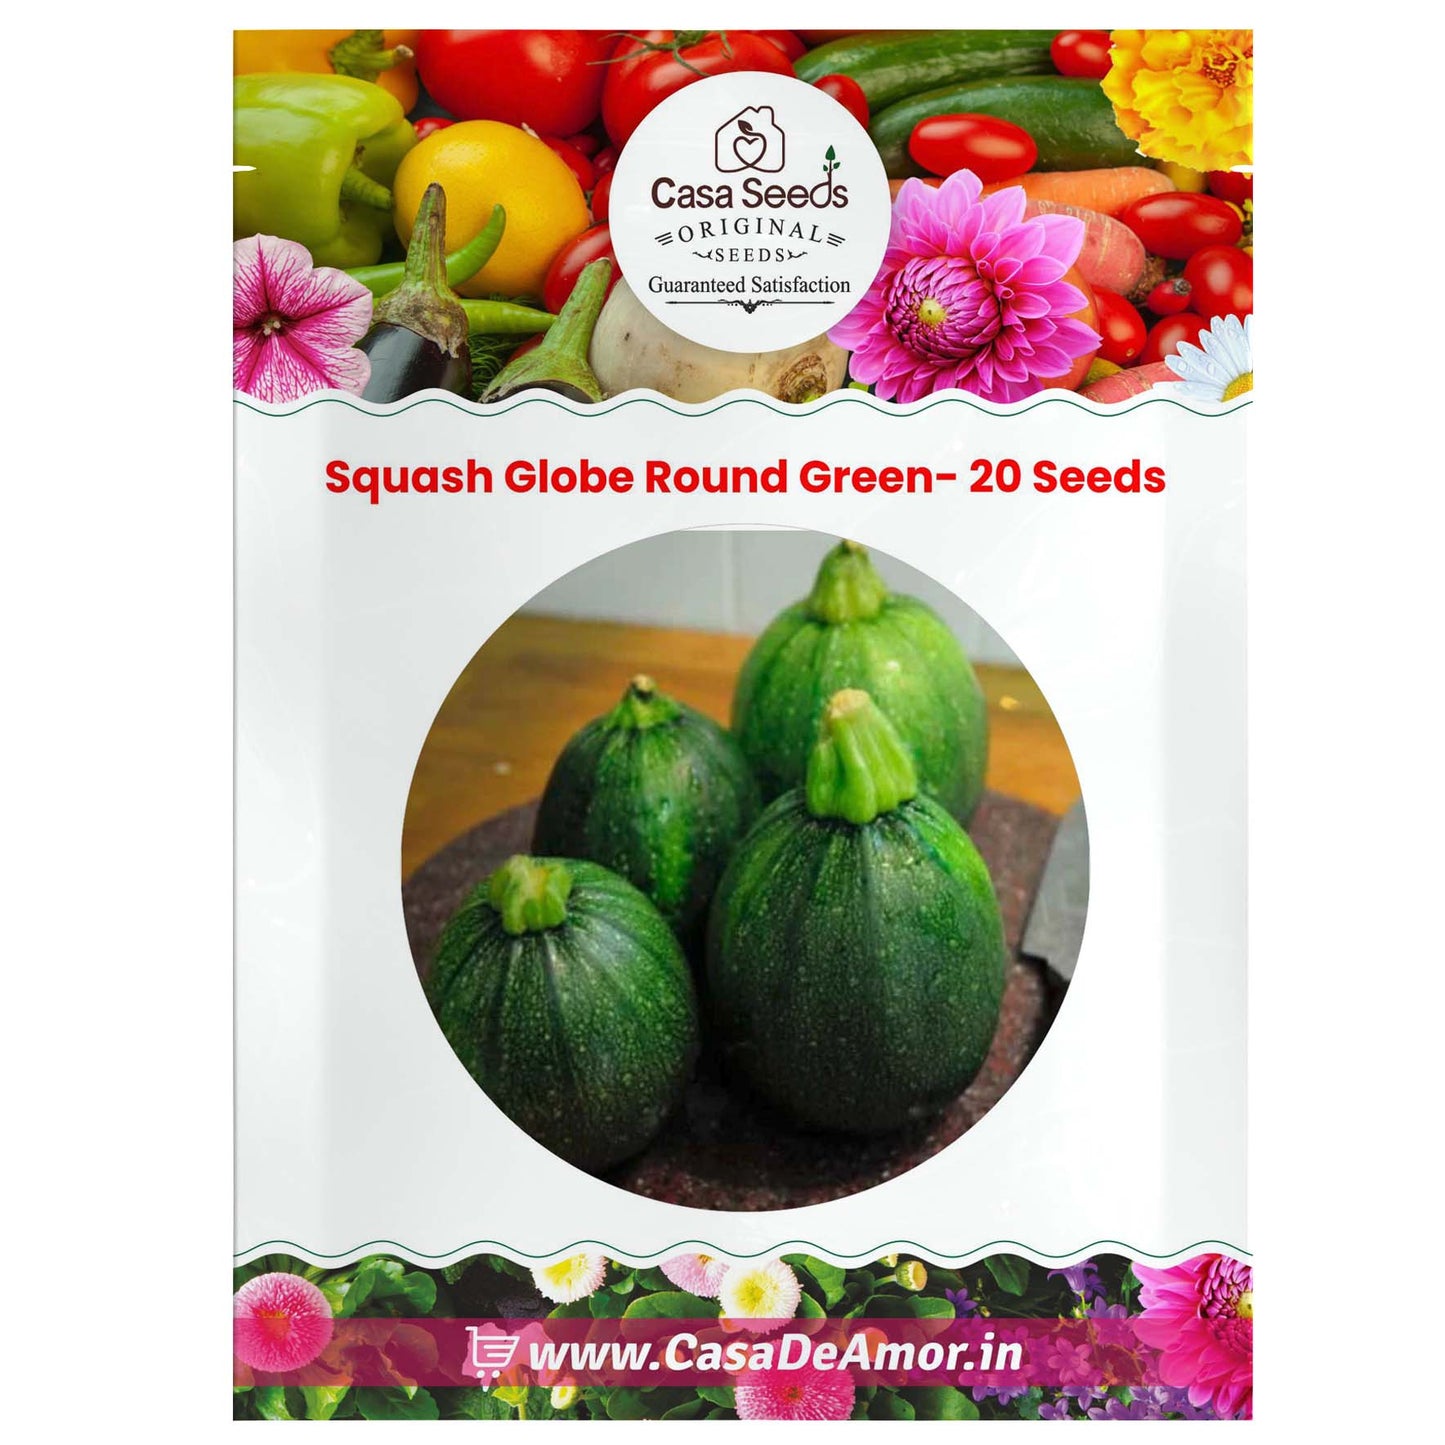 Squash Globe Round Green- 20 Seeds